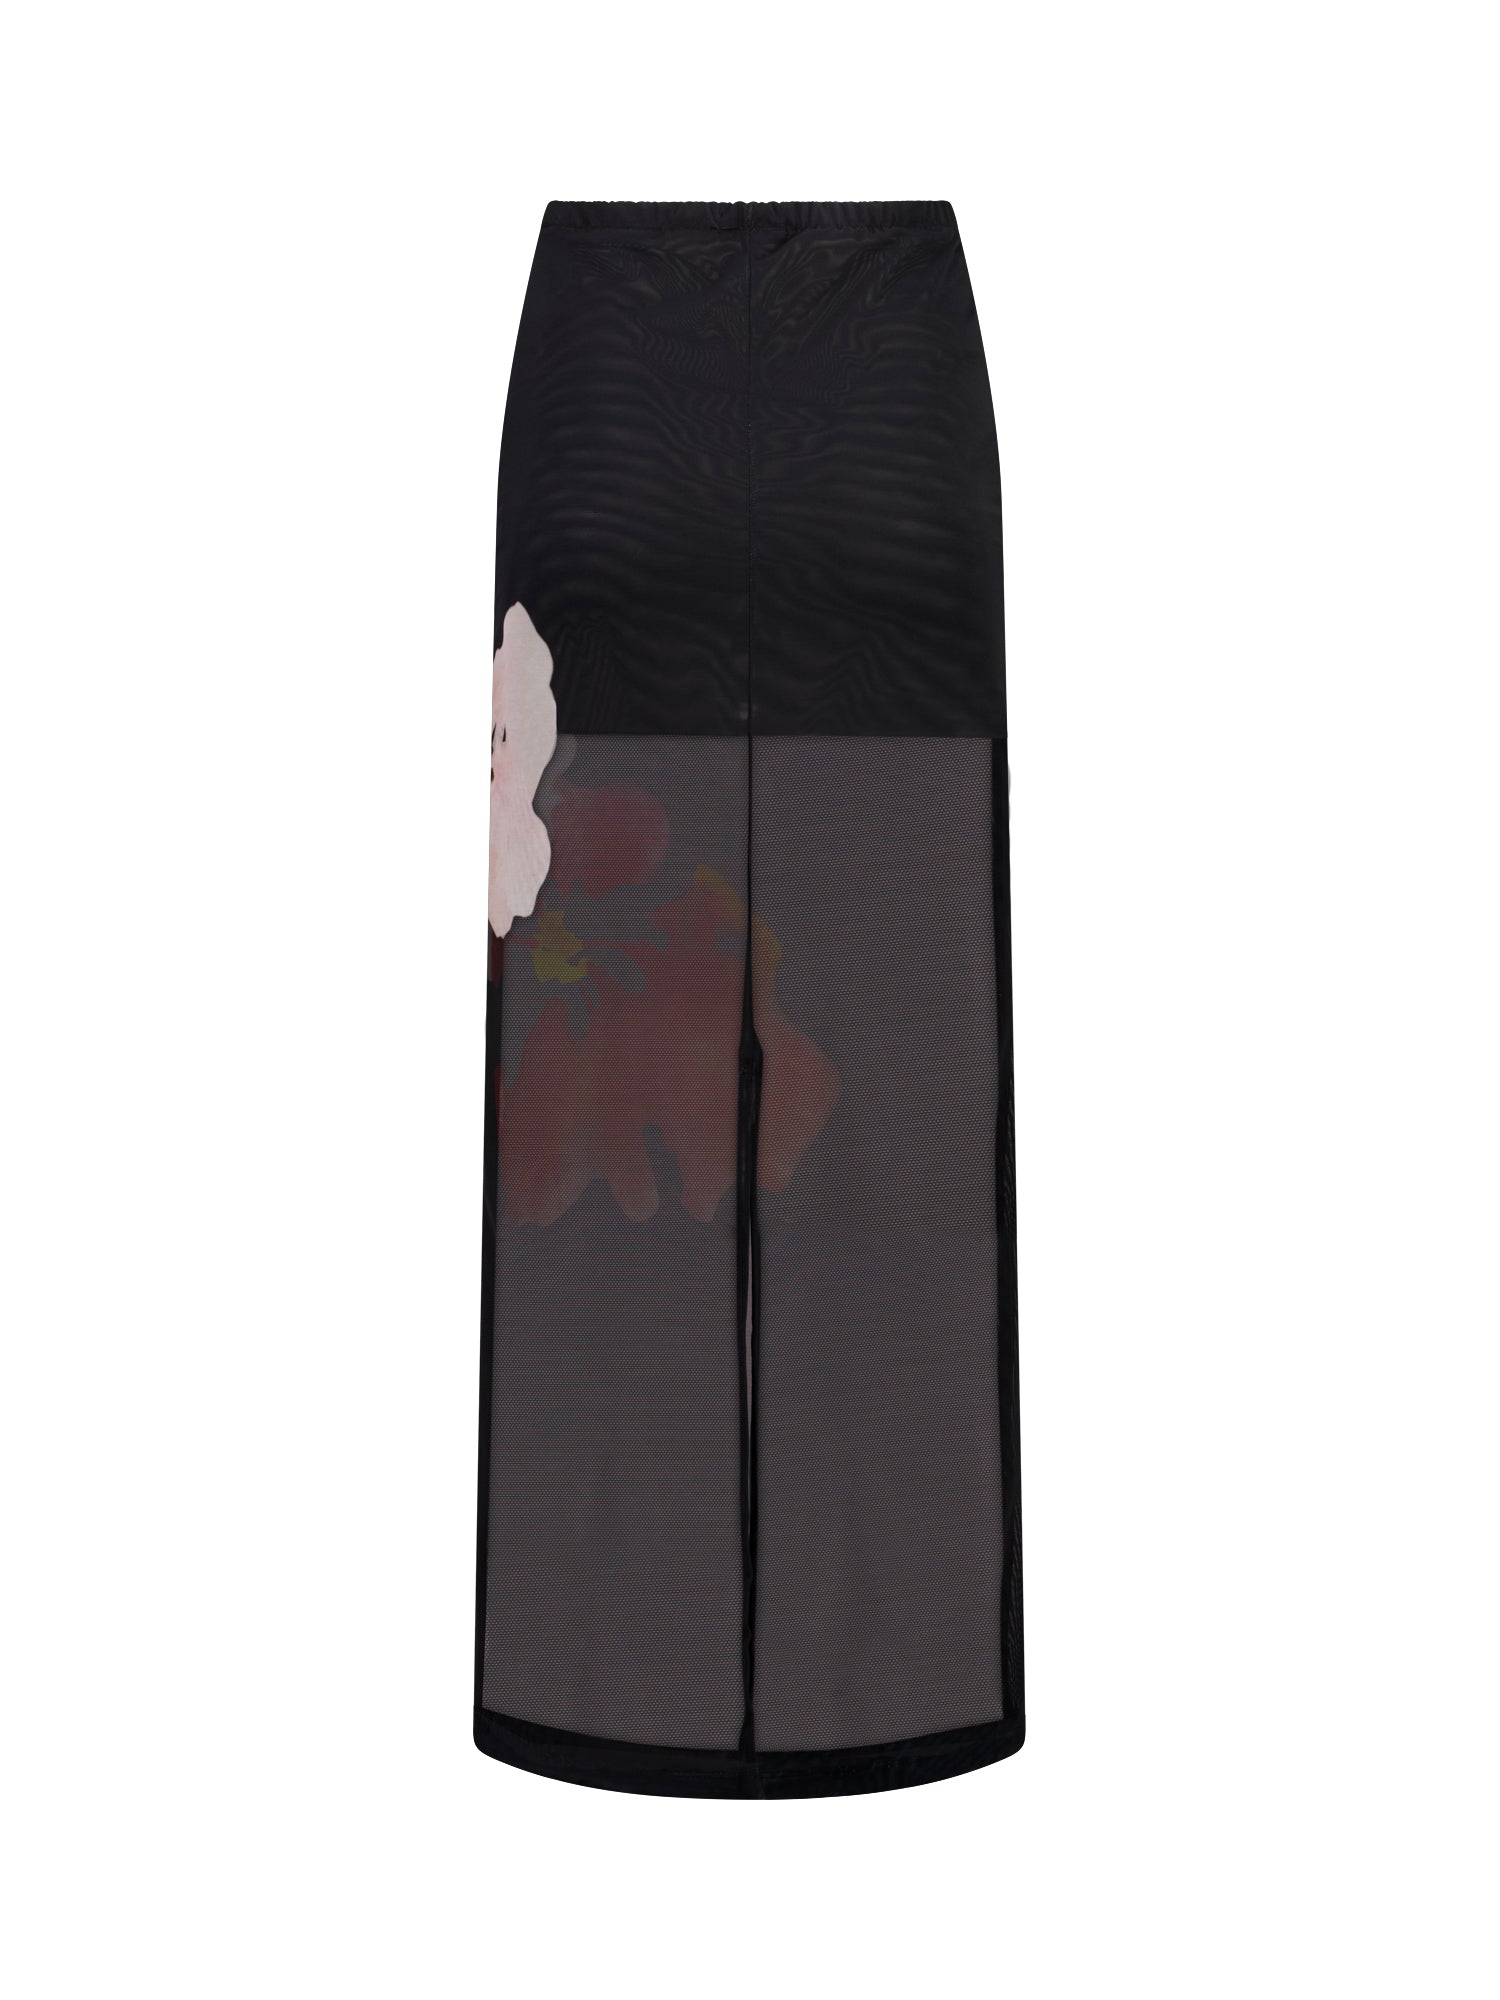 Mesh Maxi Skirt | Black Floral